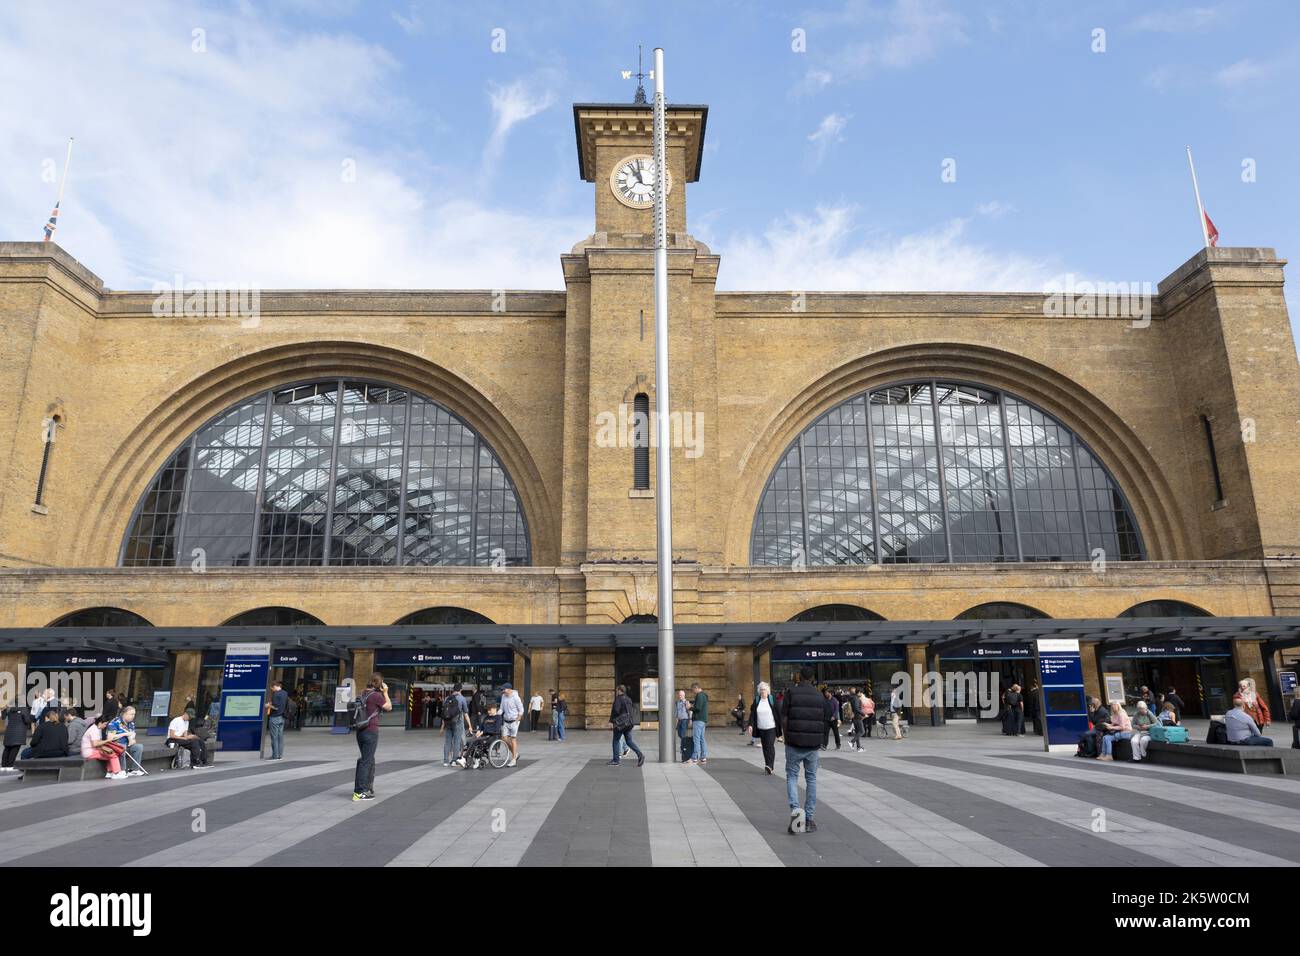 Kings Cross railway station frontage, London Stock Photo